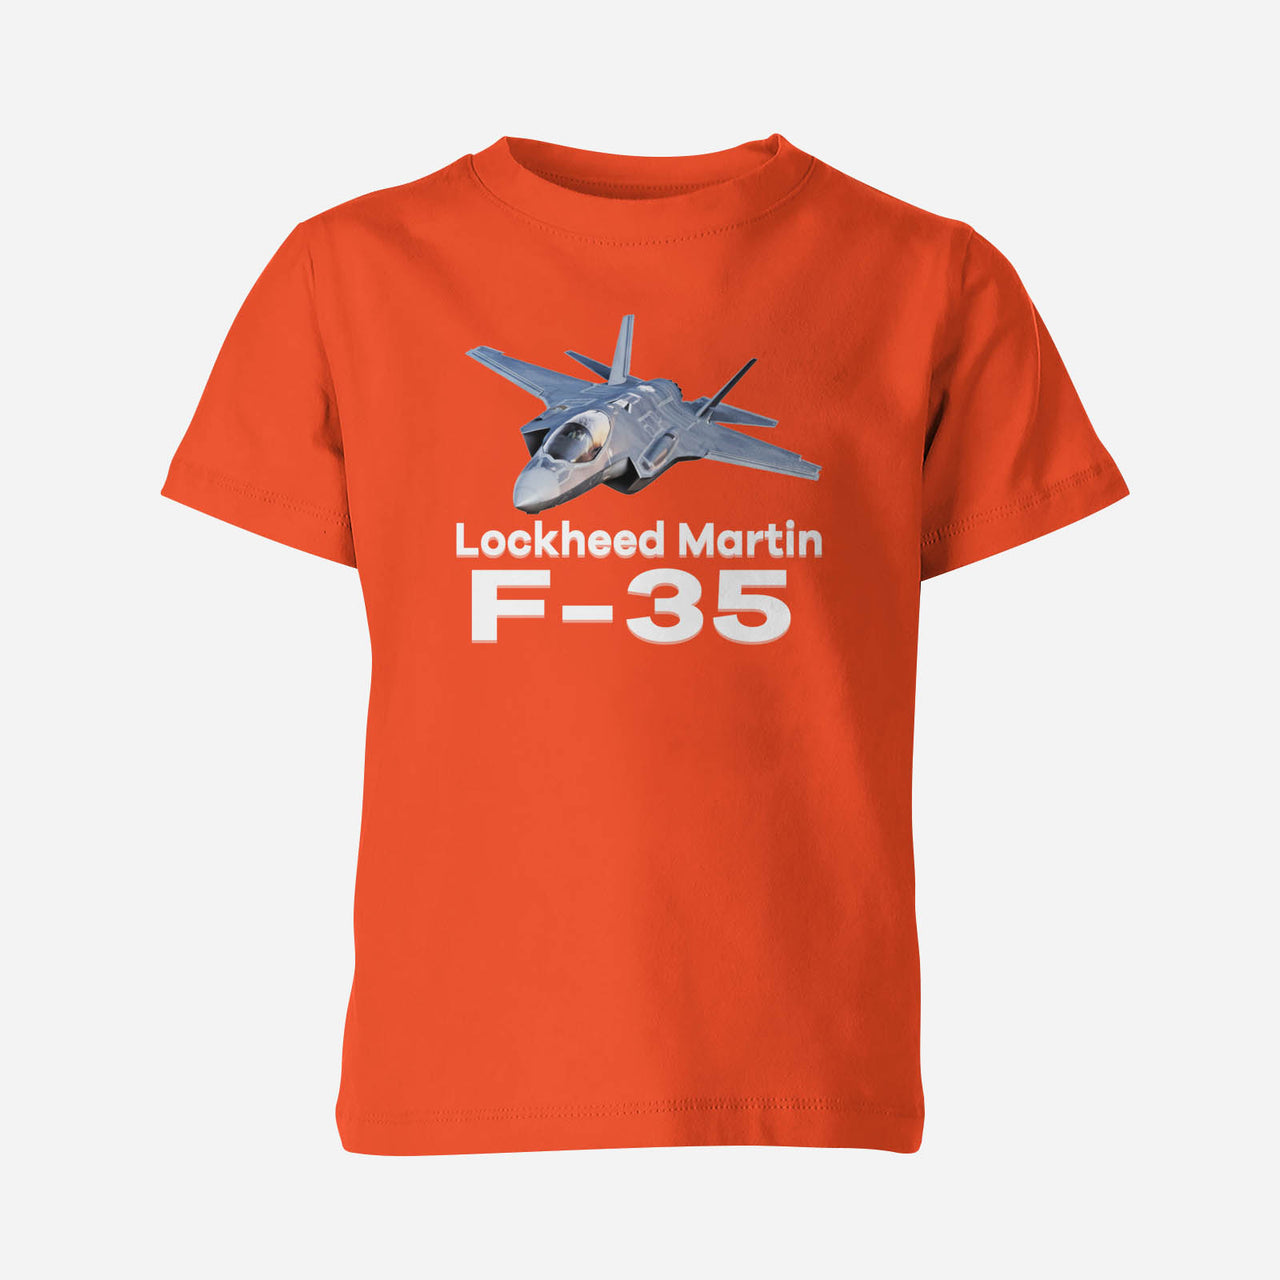 The Lockheed Martin F35 Designed Children T-Shirts